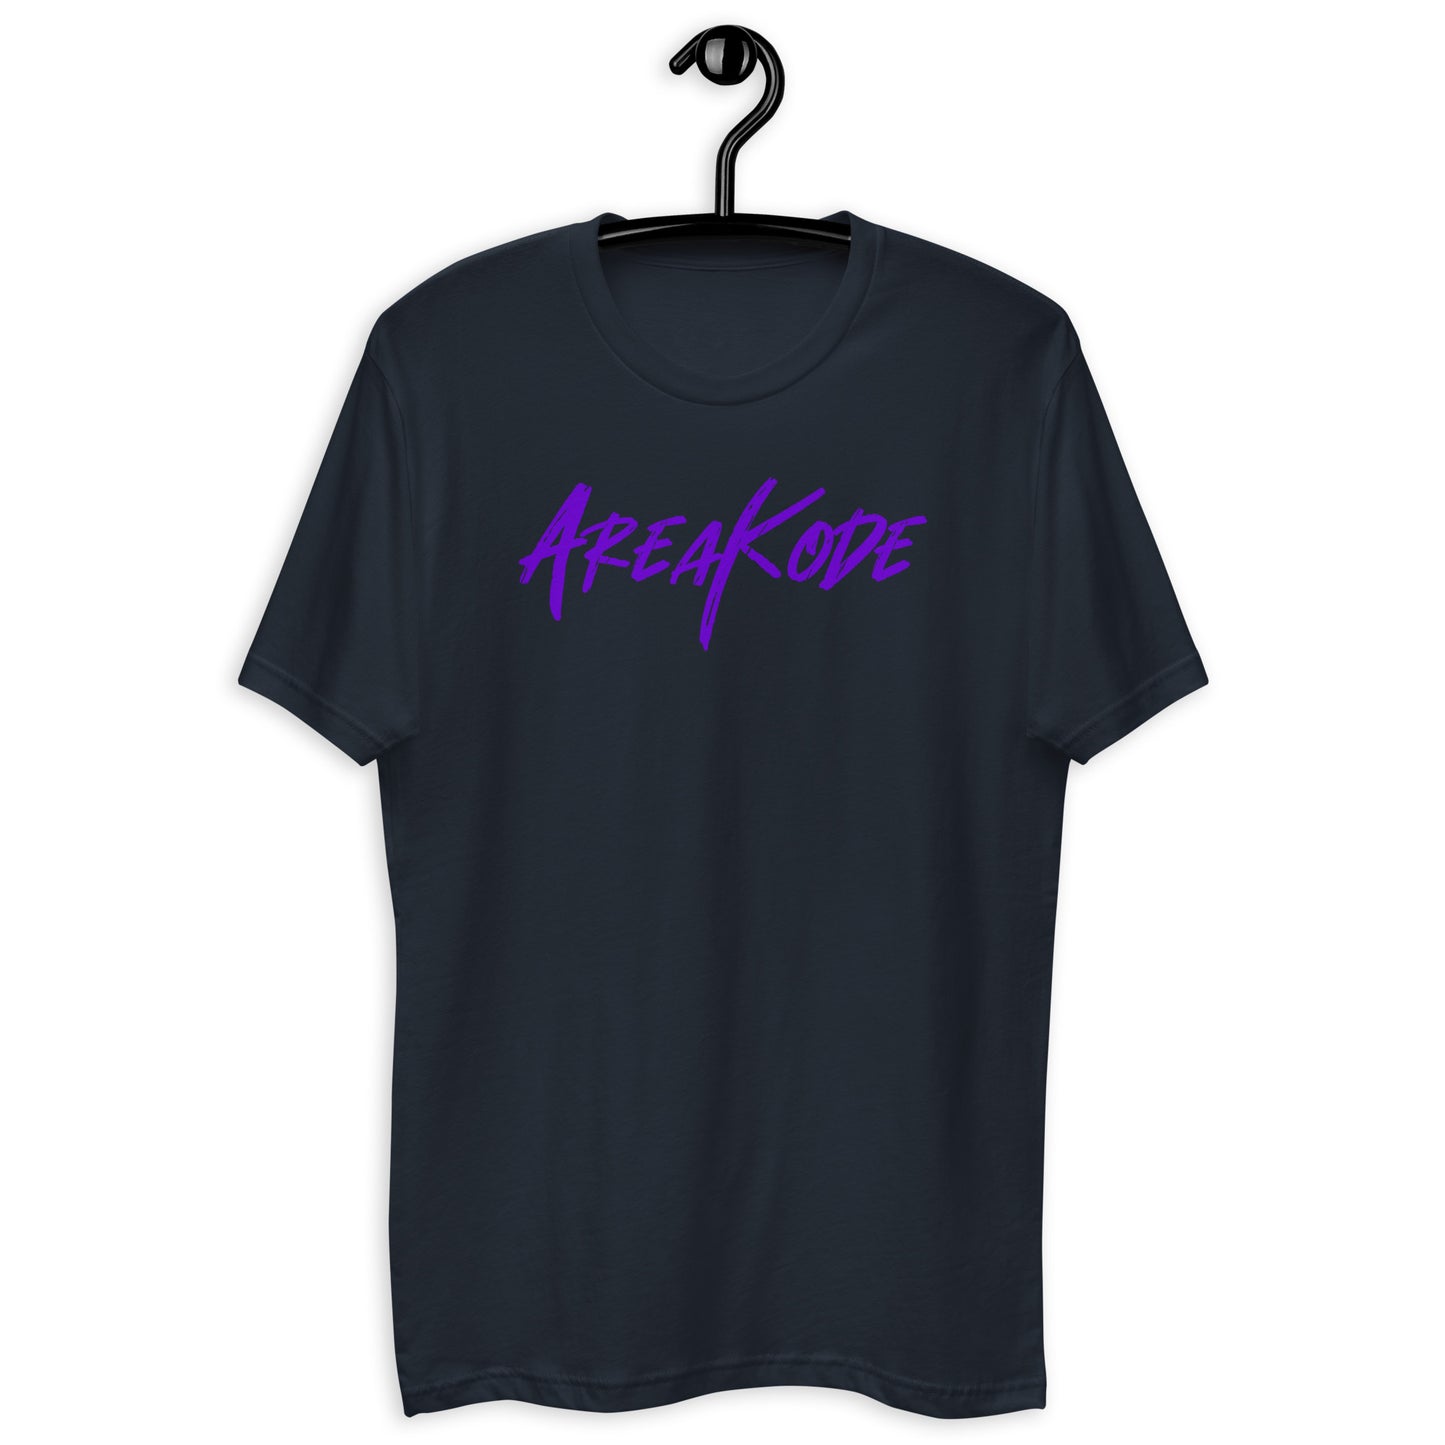 M| AreaKode (purple)